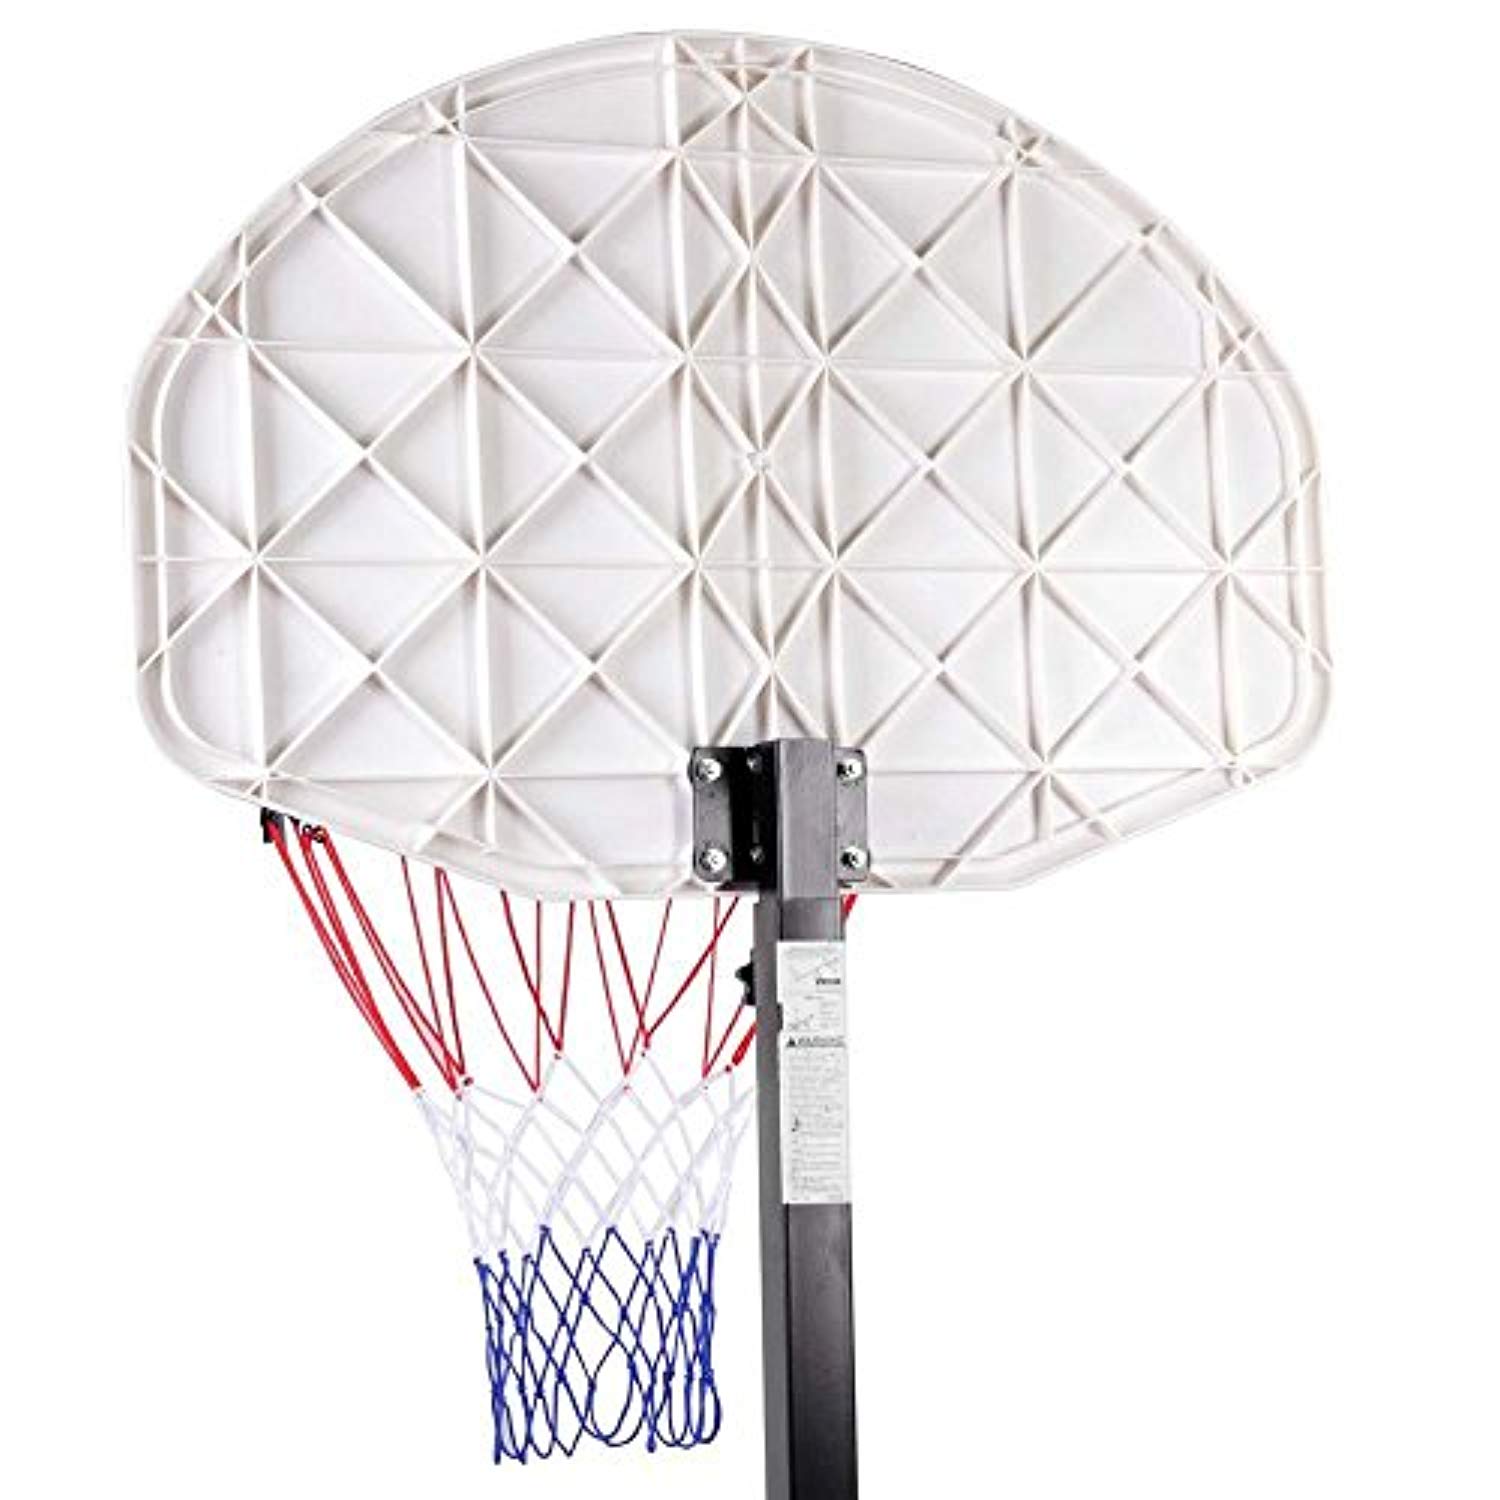 Indoor Outdoor Basketball stand Backboard withWheels